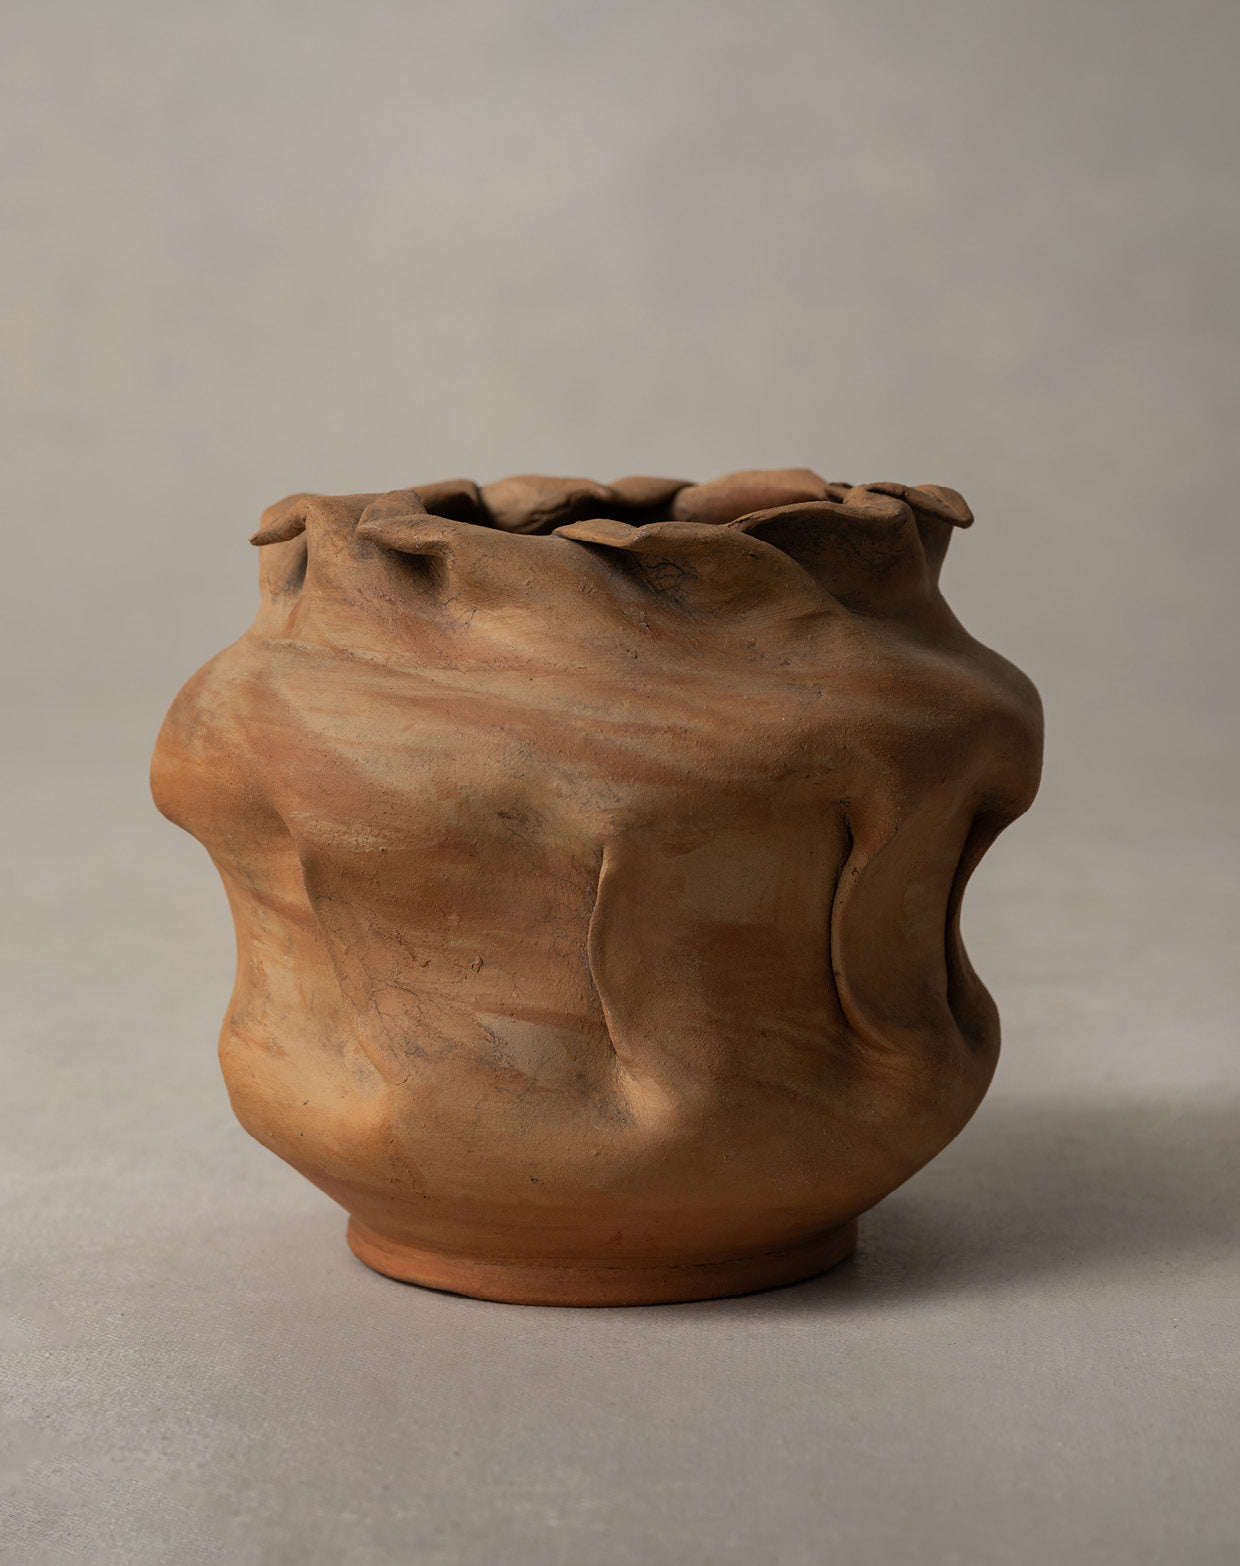 George E. Ohr, Bisque Vase with In-Body Twist, circa 1898-1910 (GOEA04)